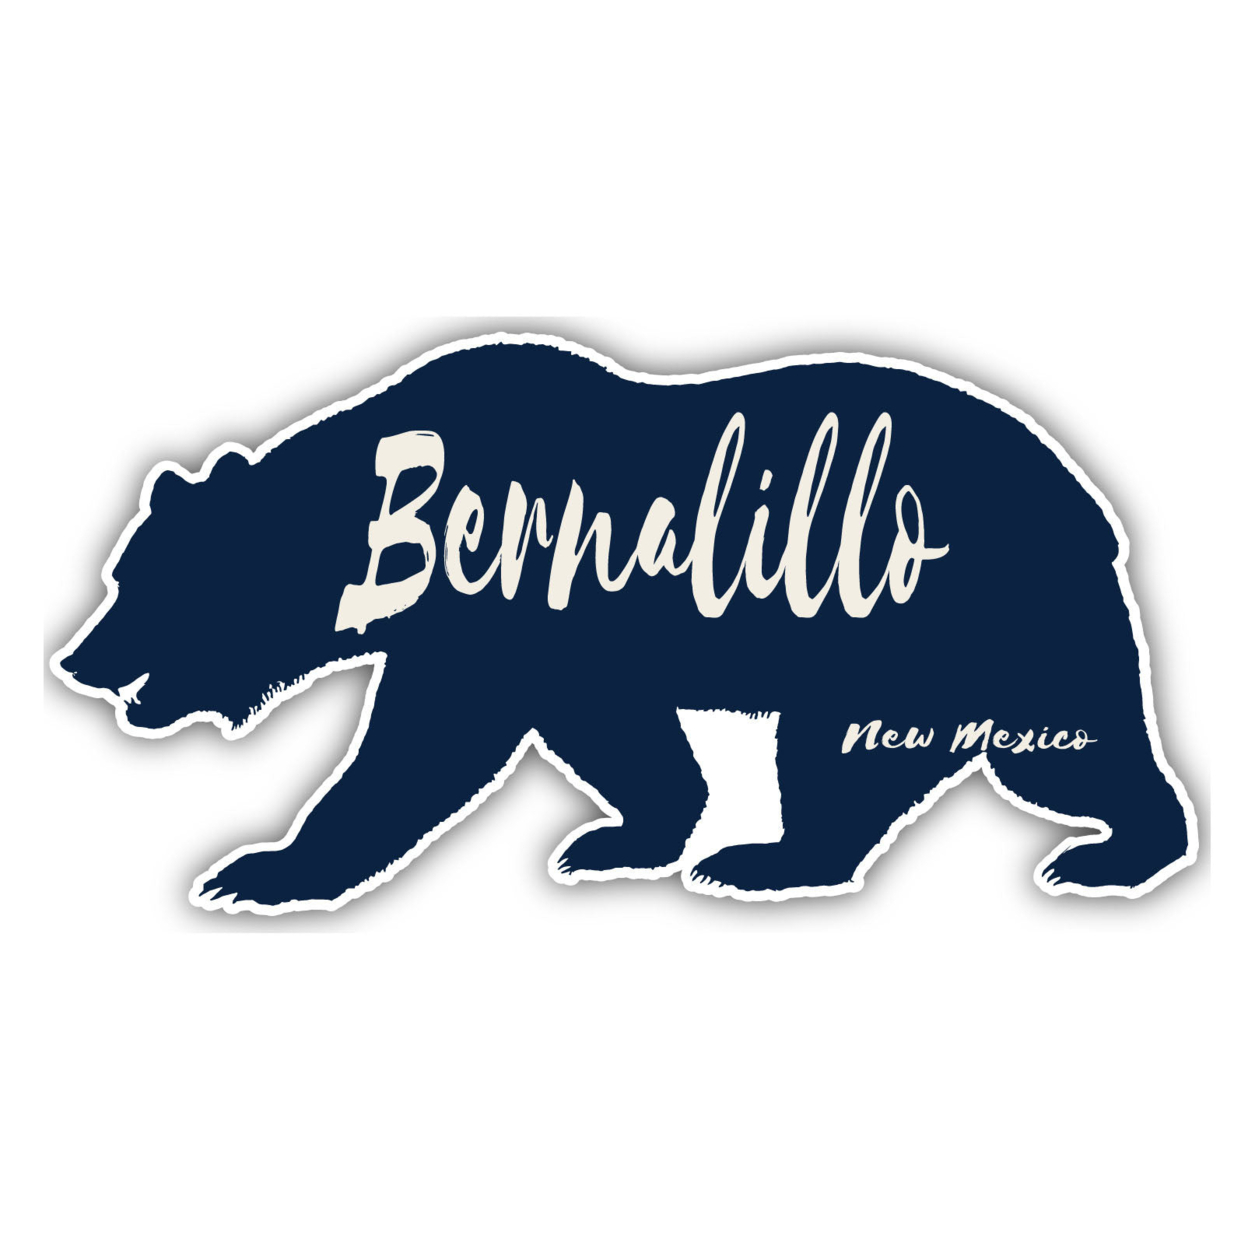 Bernalillo New Mexico Souvenir Decorative Stickers (Choose Theme And Size) - Single Unit, 8-Inch, Camp Life